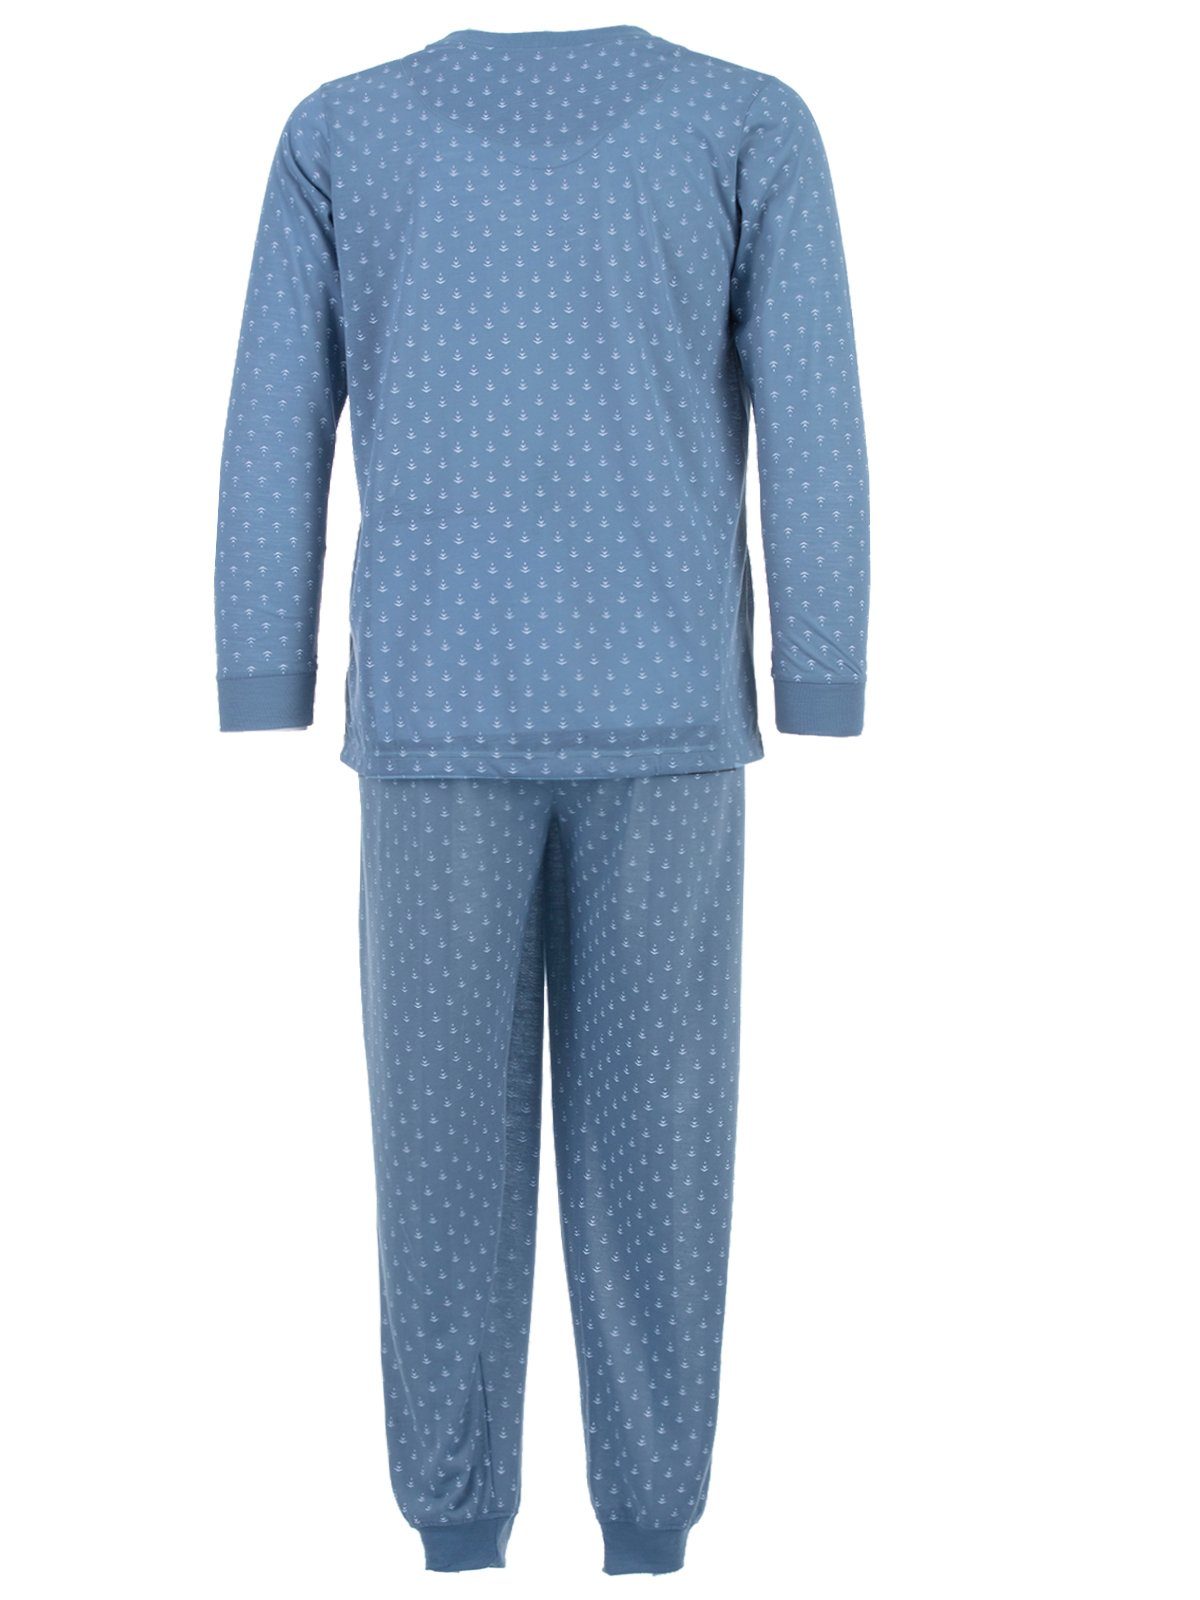 Pfeil graublau Set Langarm Schlafanzug Pyjama - Lucky